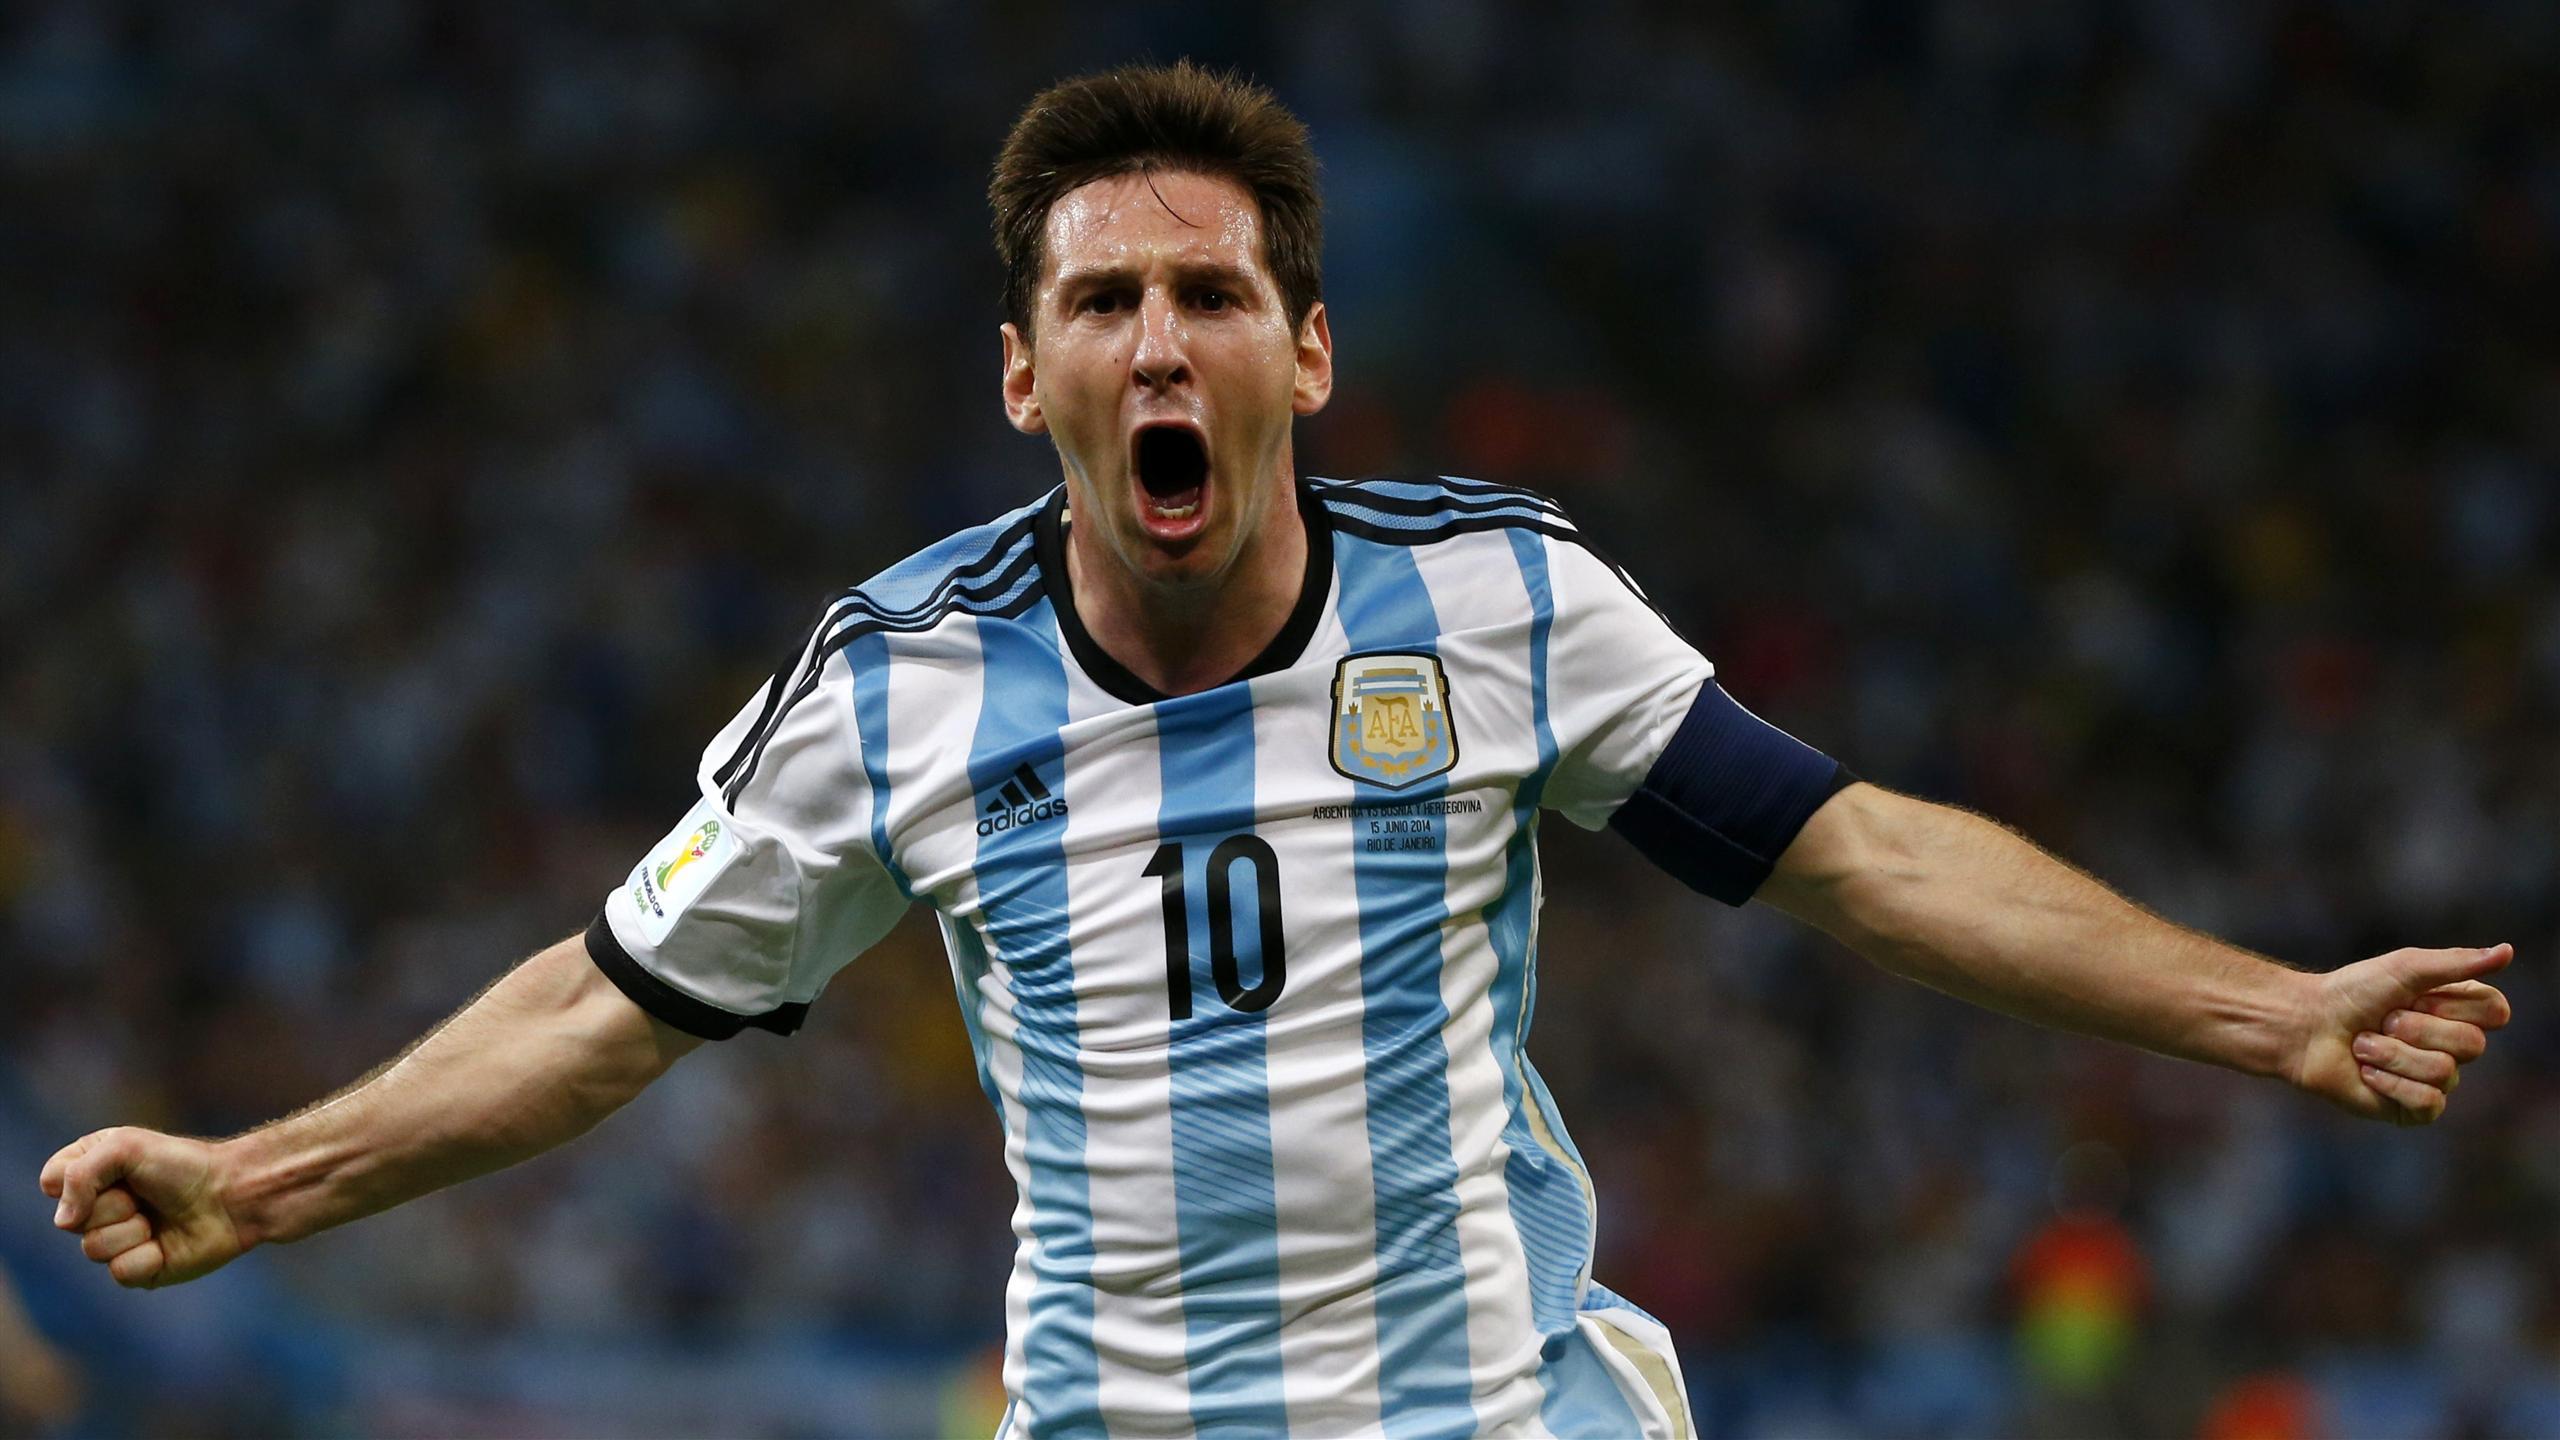 Lionel Messi Argentina Wallpapers